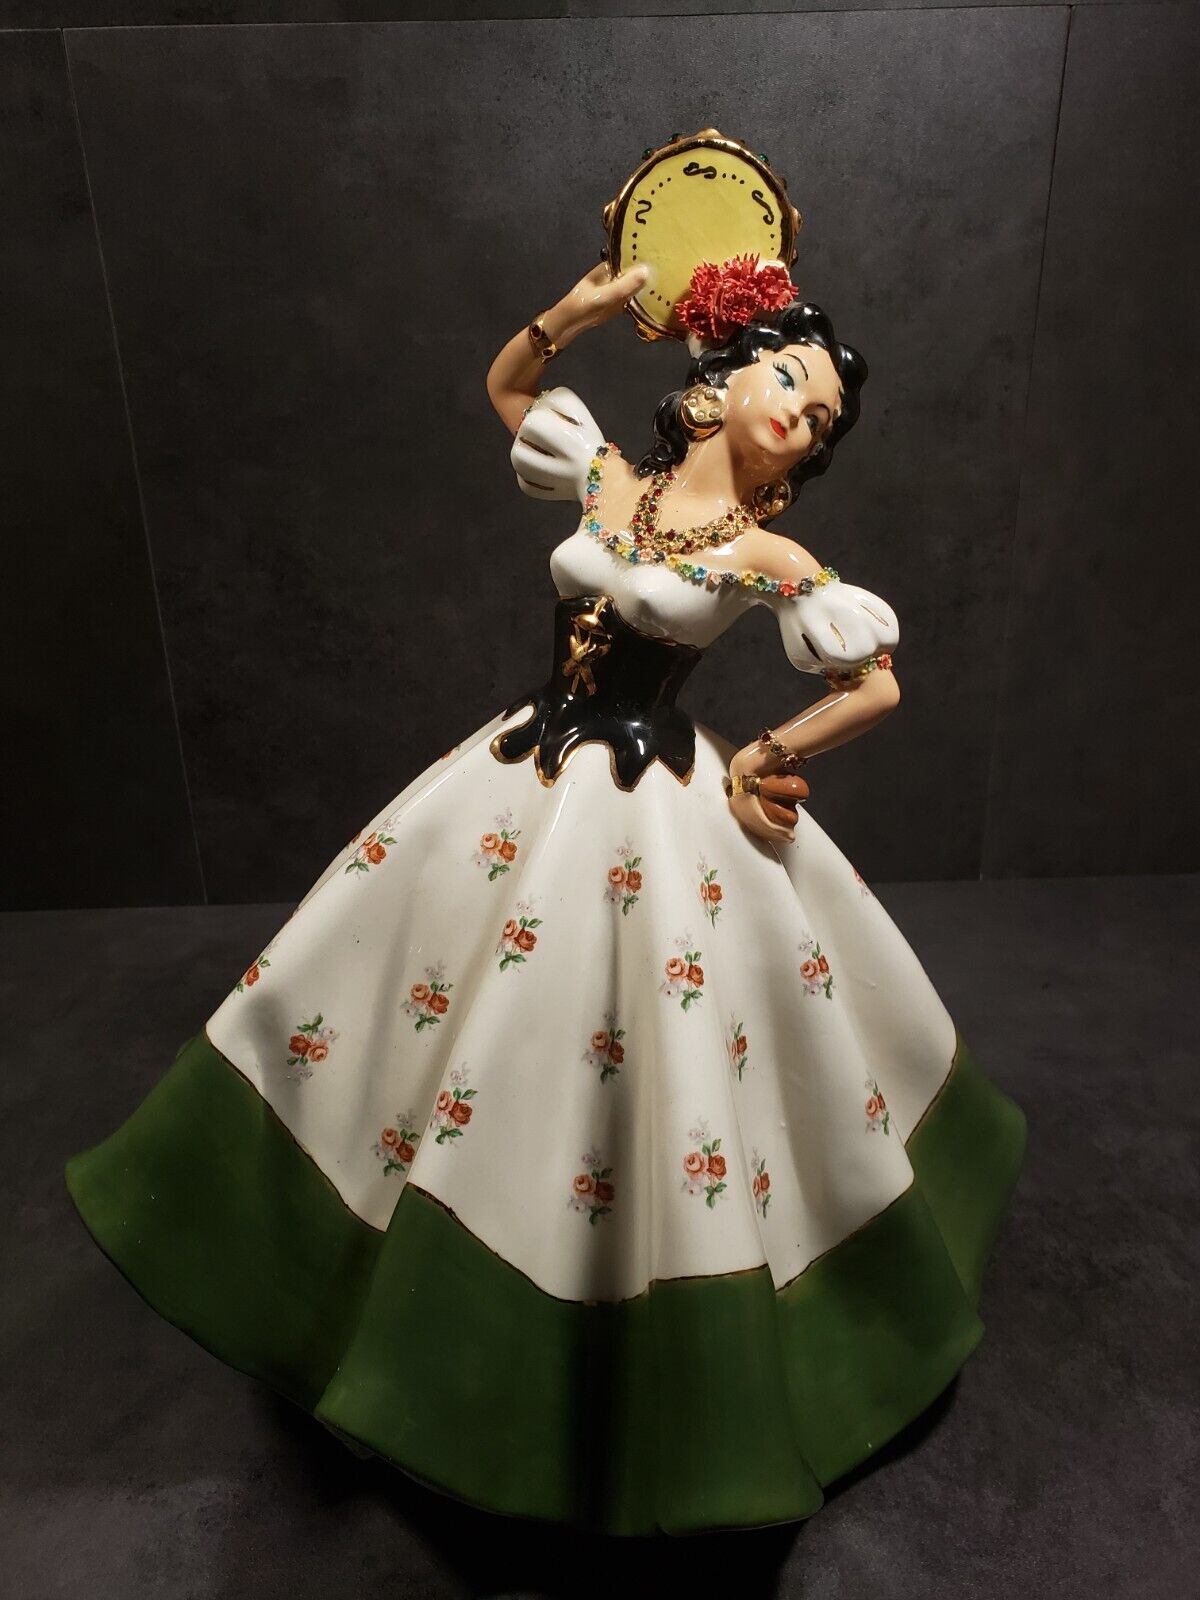 Vintage Spanish Senorita Dancing Figurine with Jewels